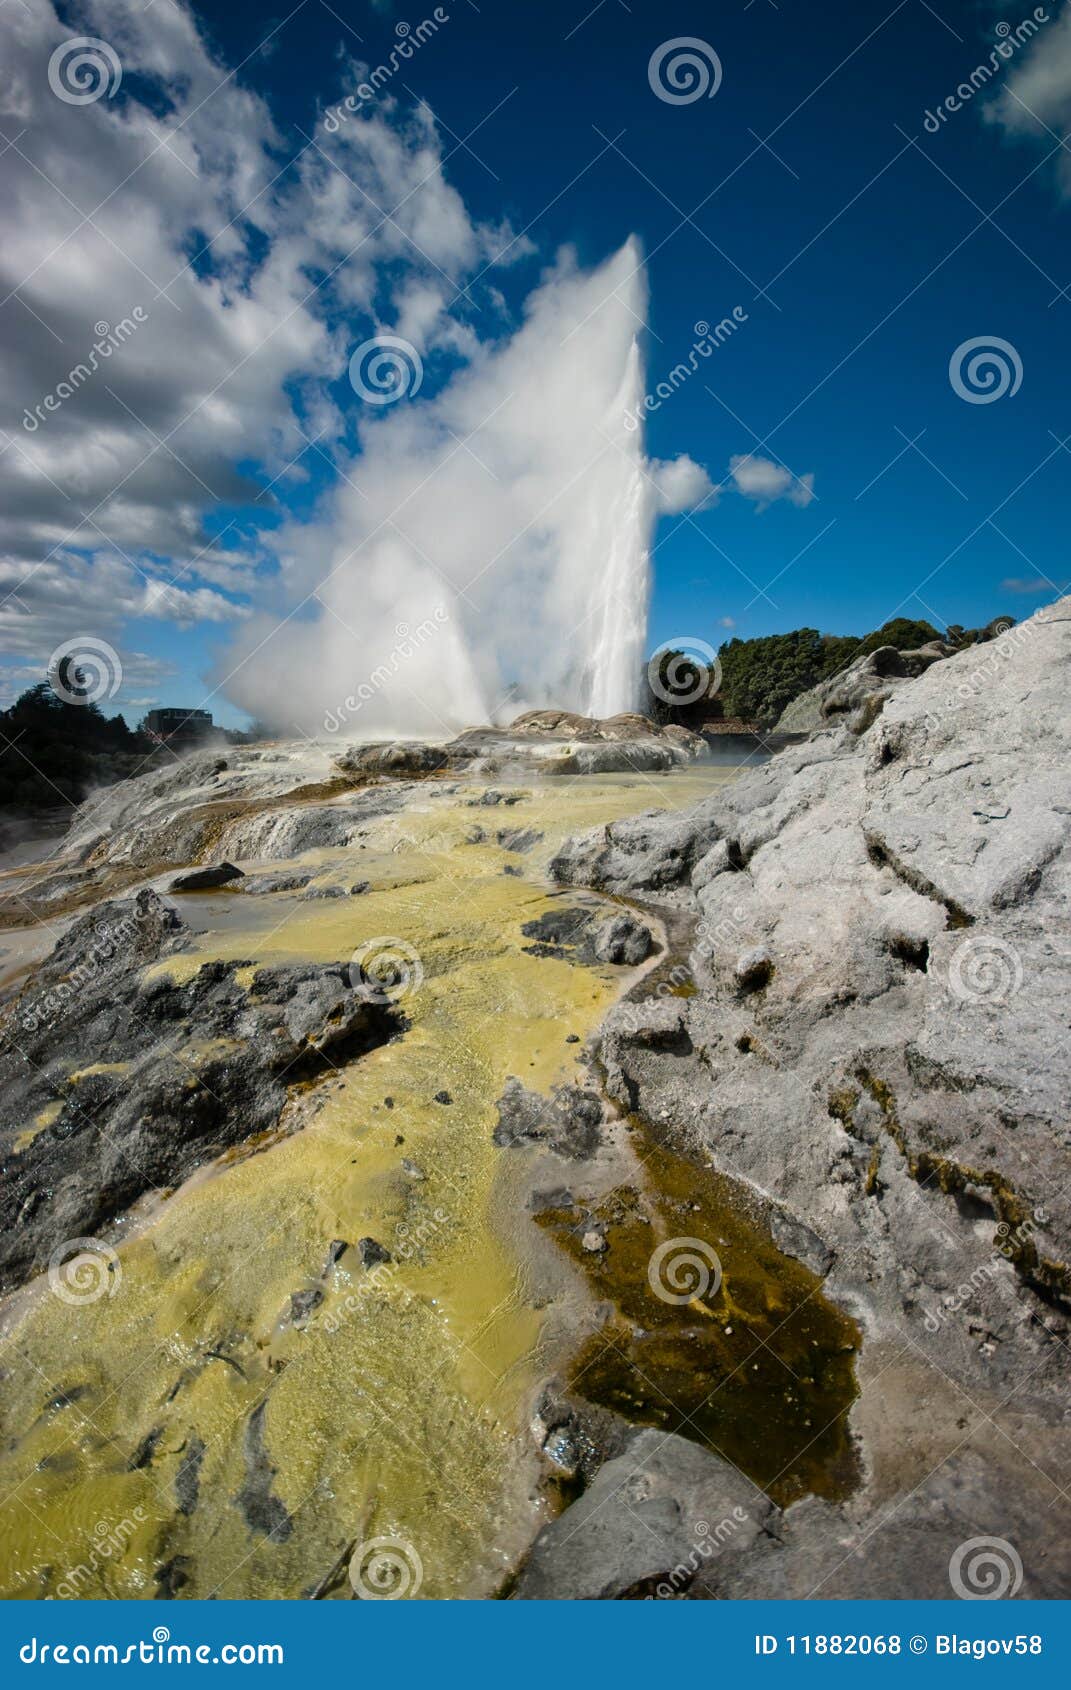 sulphur and silica geothermal deposits and pohutu geyser